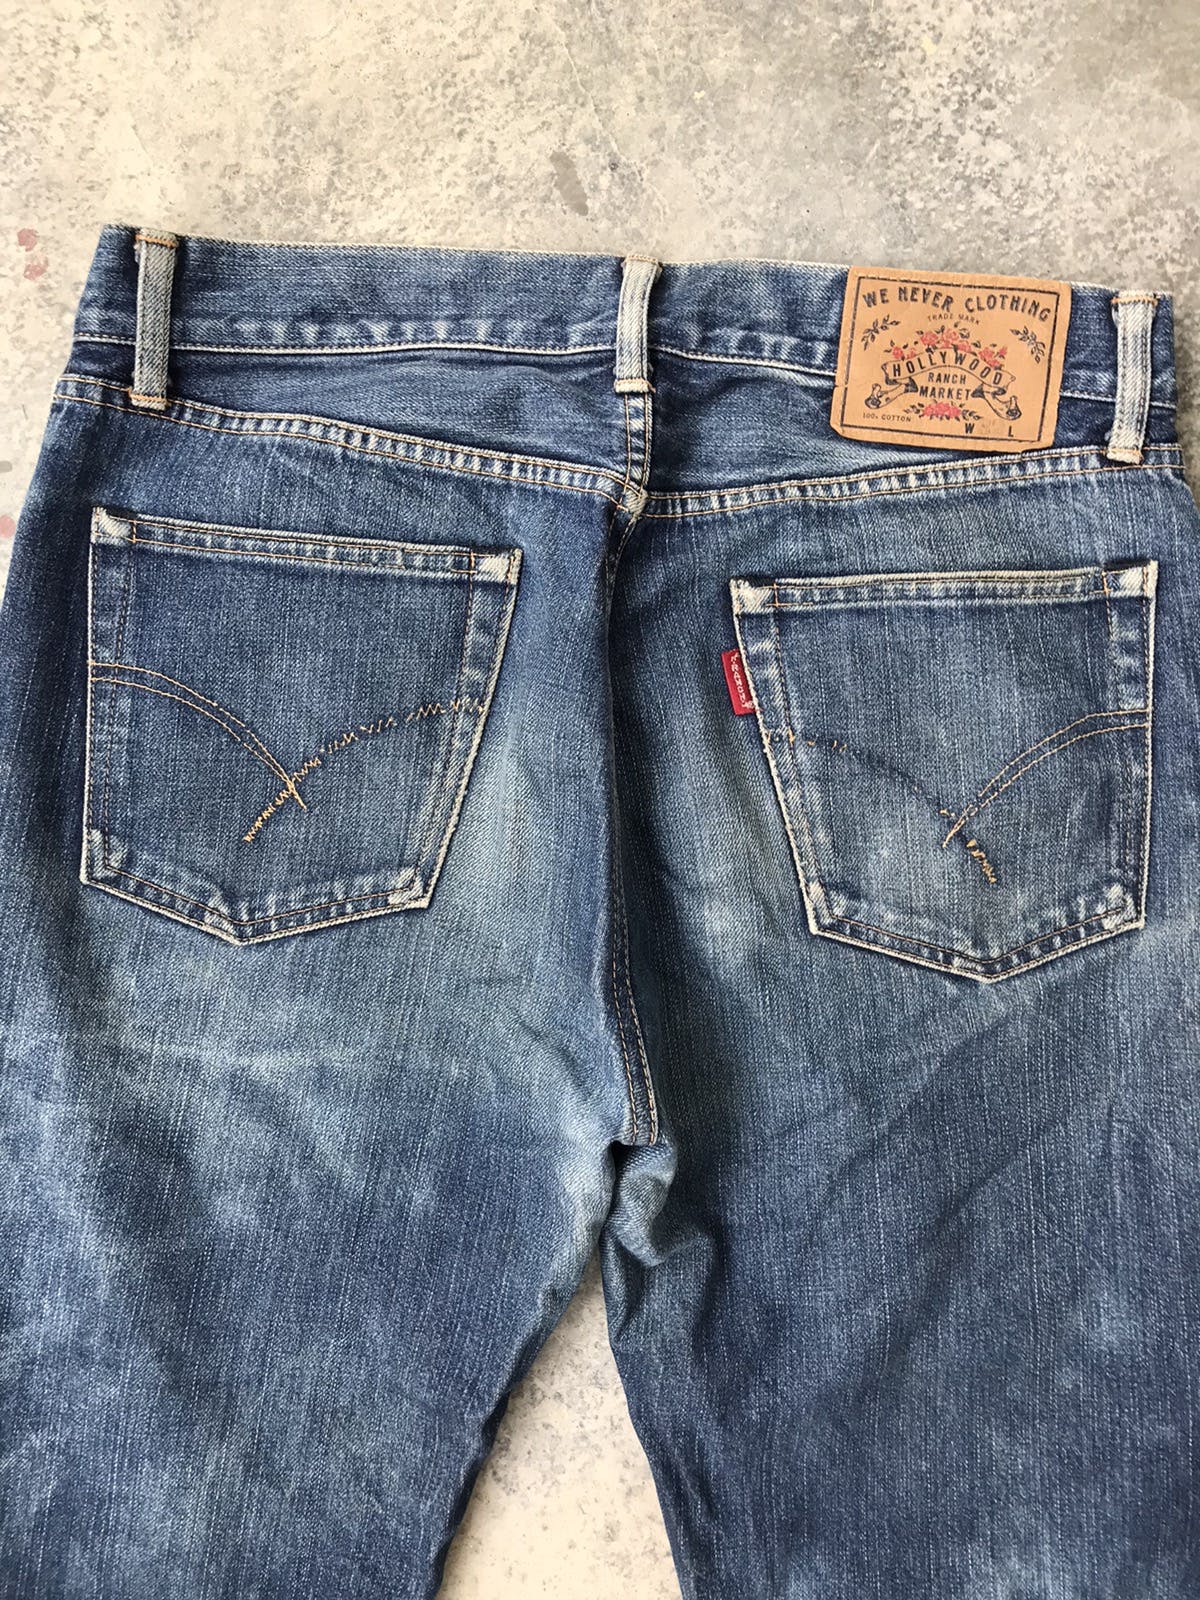 90s Hollywood Ranch Marrket Denim Jeans - 15